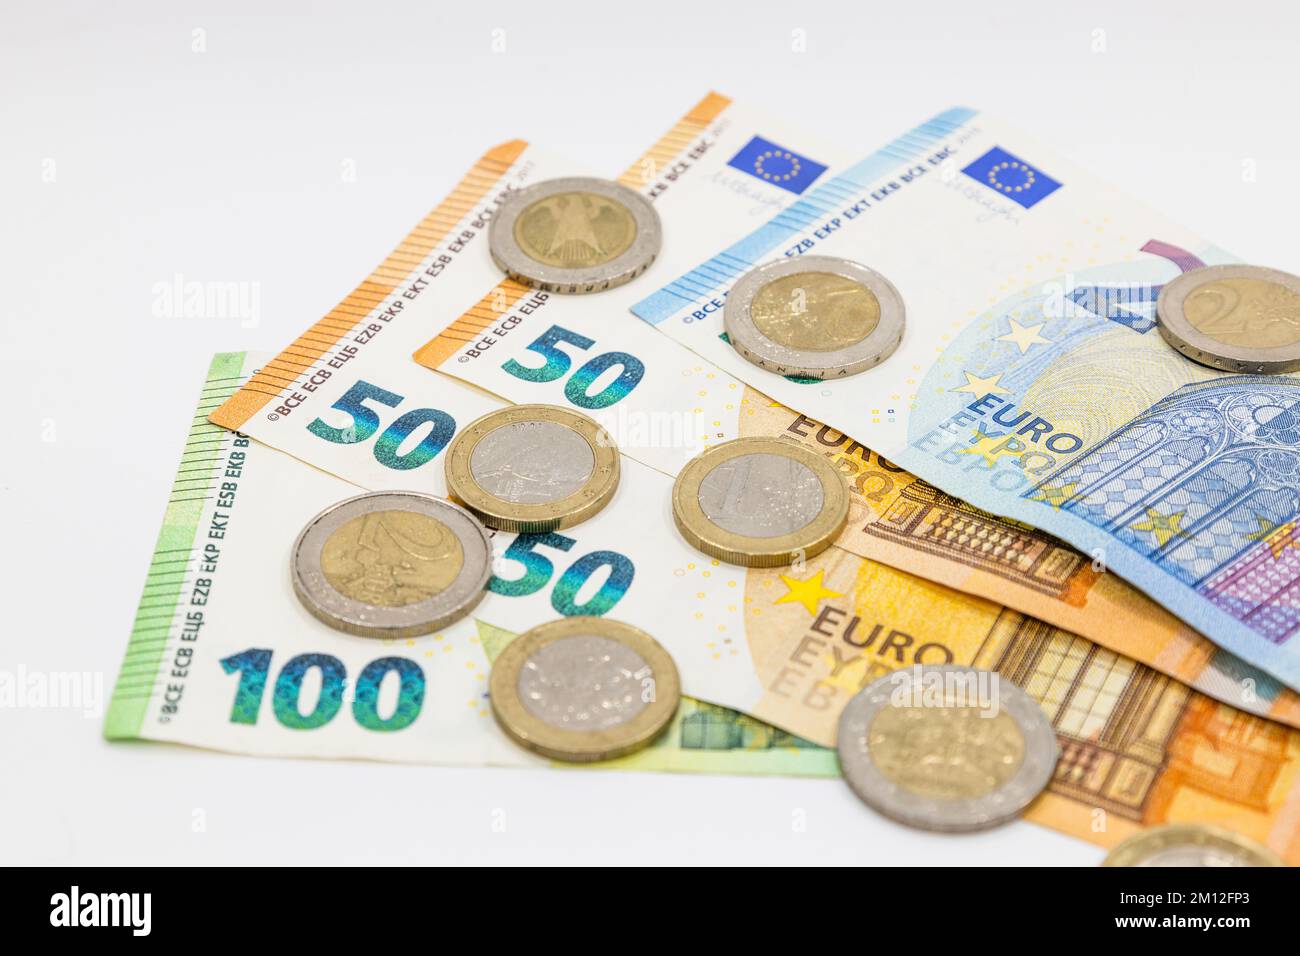 Euro banknotes and coins. Financial accounting and saving money concepts Stock Photo